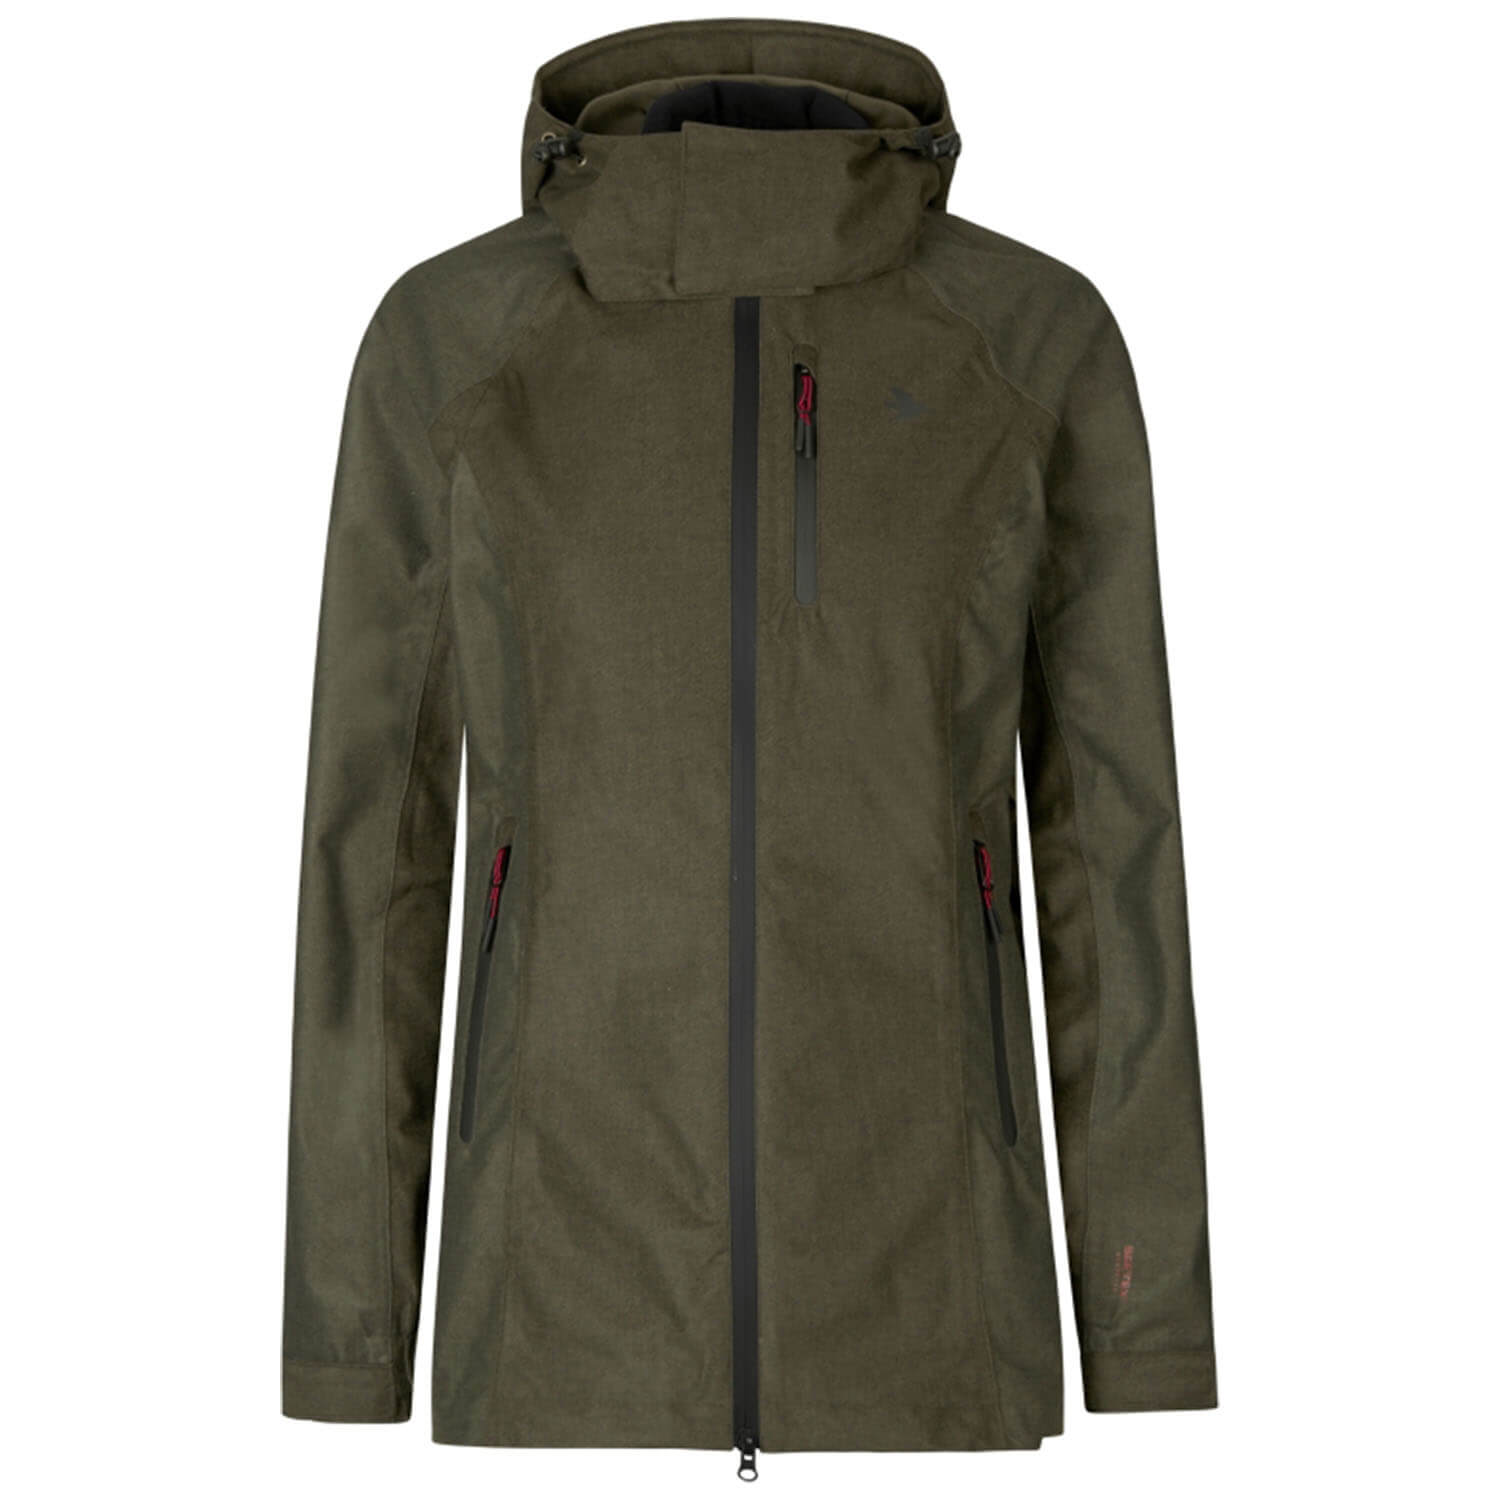 Seeland lady jacket avail (pine green melange) - Hunting Jackets